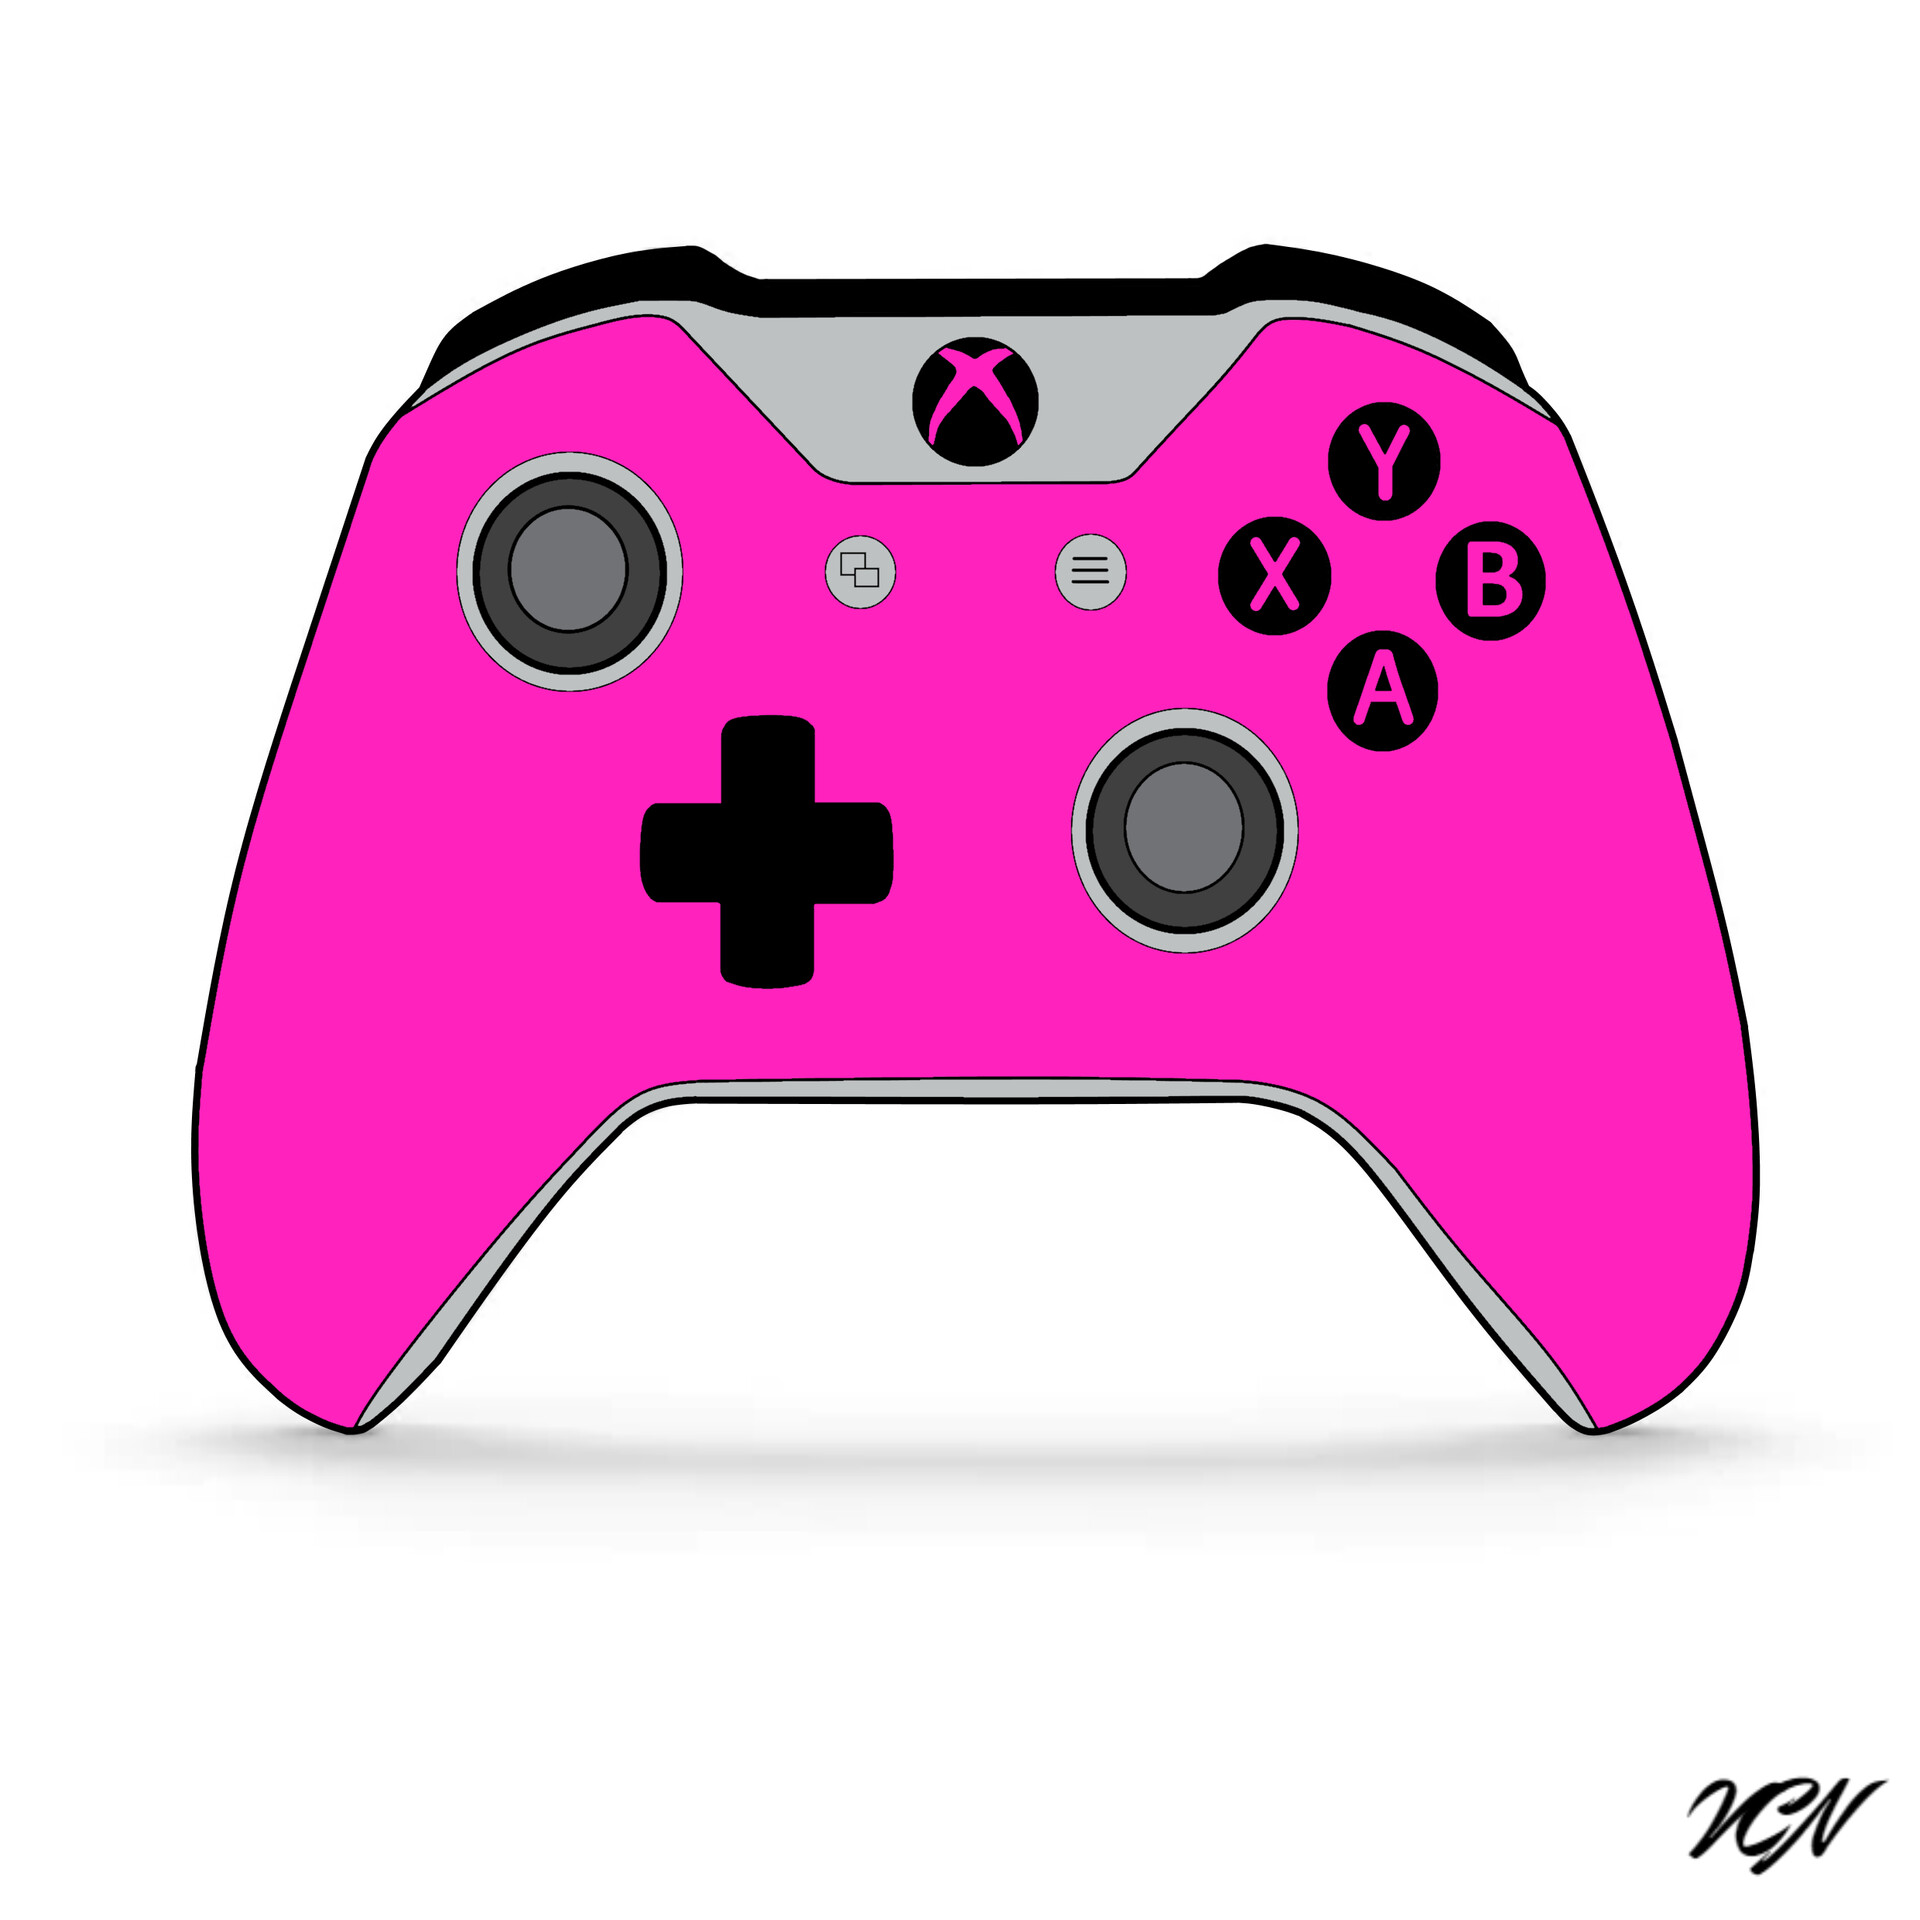 ArtStation - Pink Xbox Controller